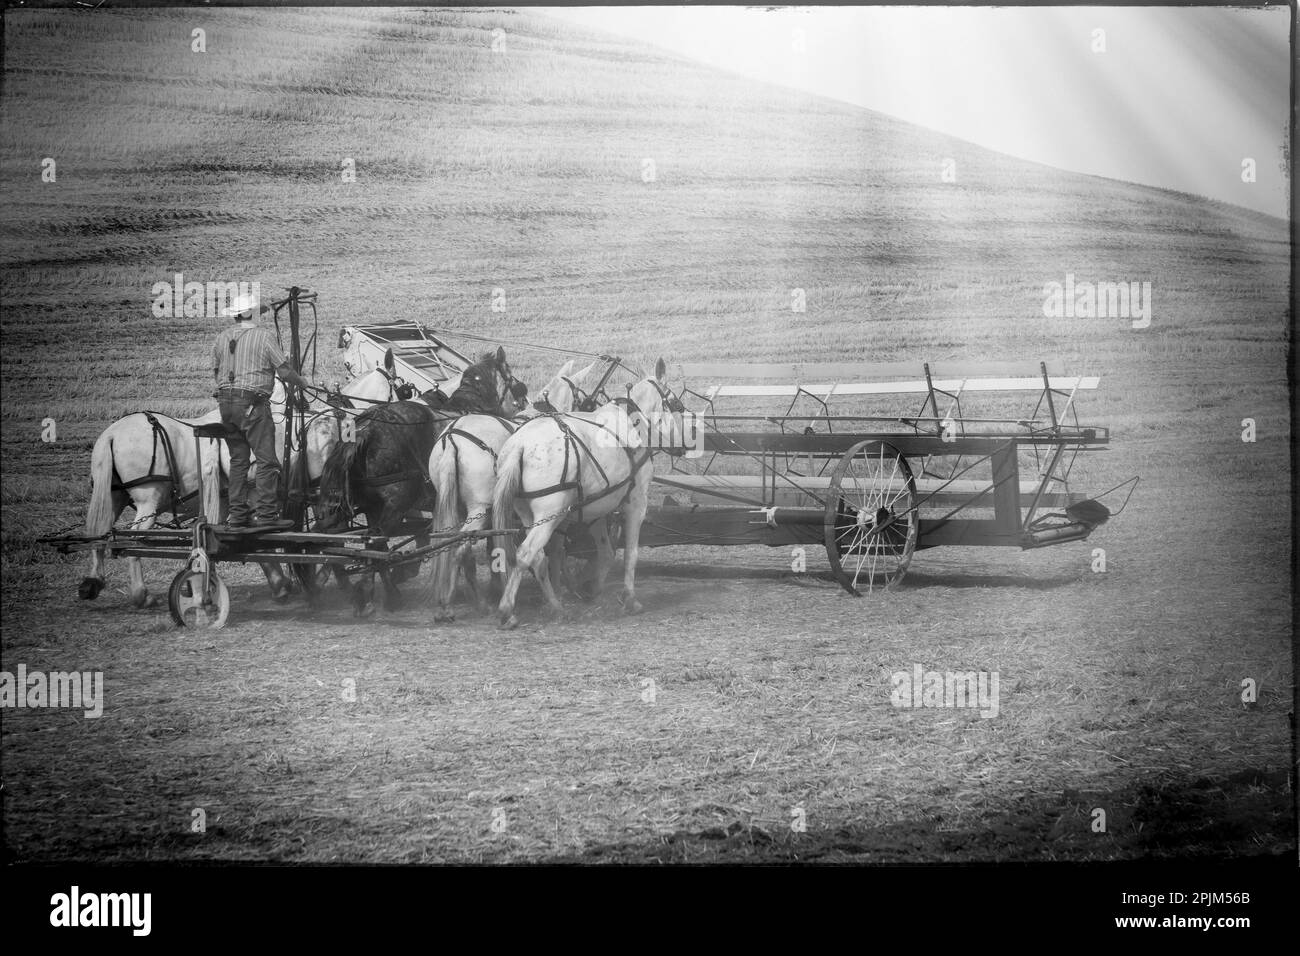 USA, Washington State, Whitman County, Palouse. Harvesting wheat. Old fashioned threshing farm equipment. (Editorial Use Only) Stock Photo